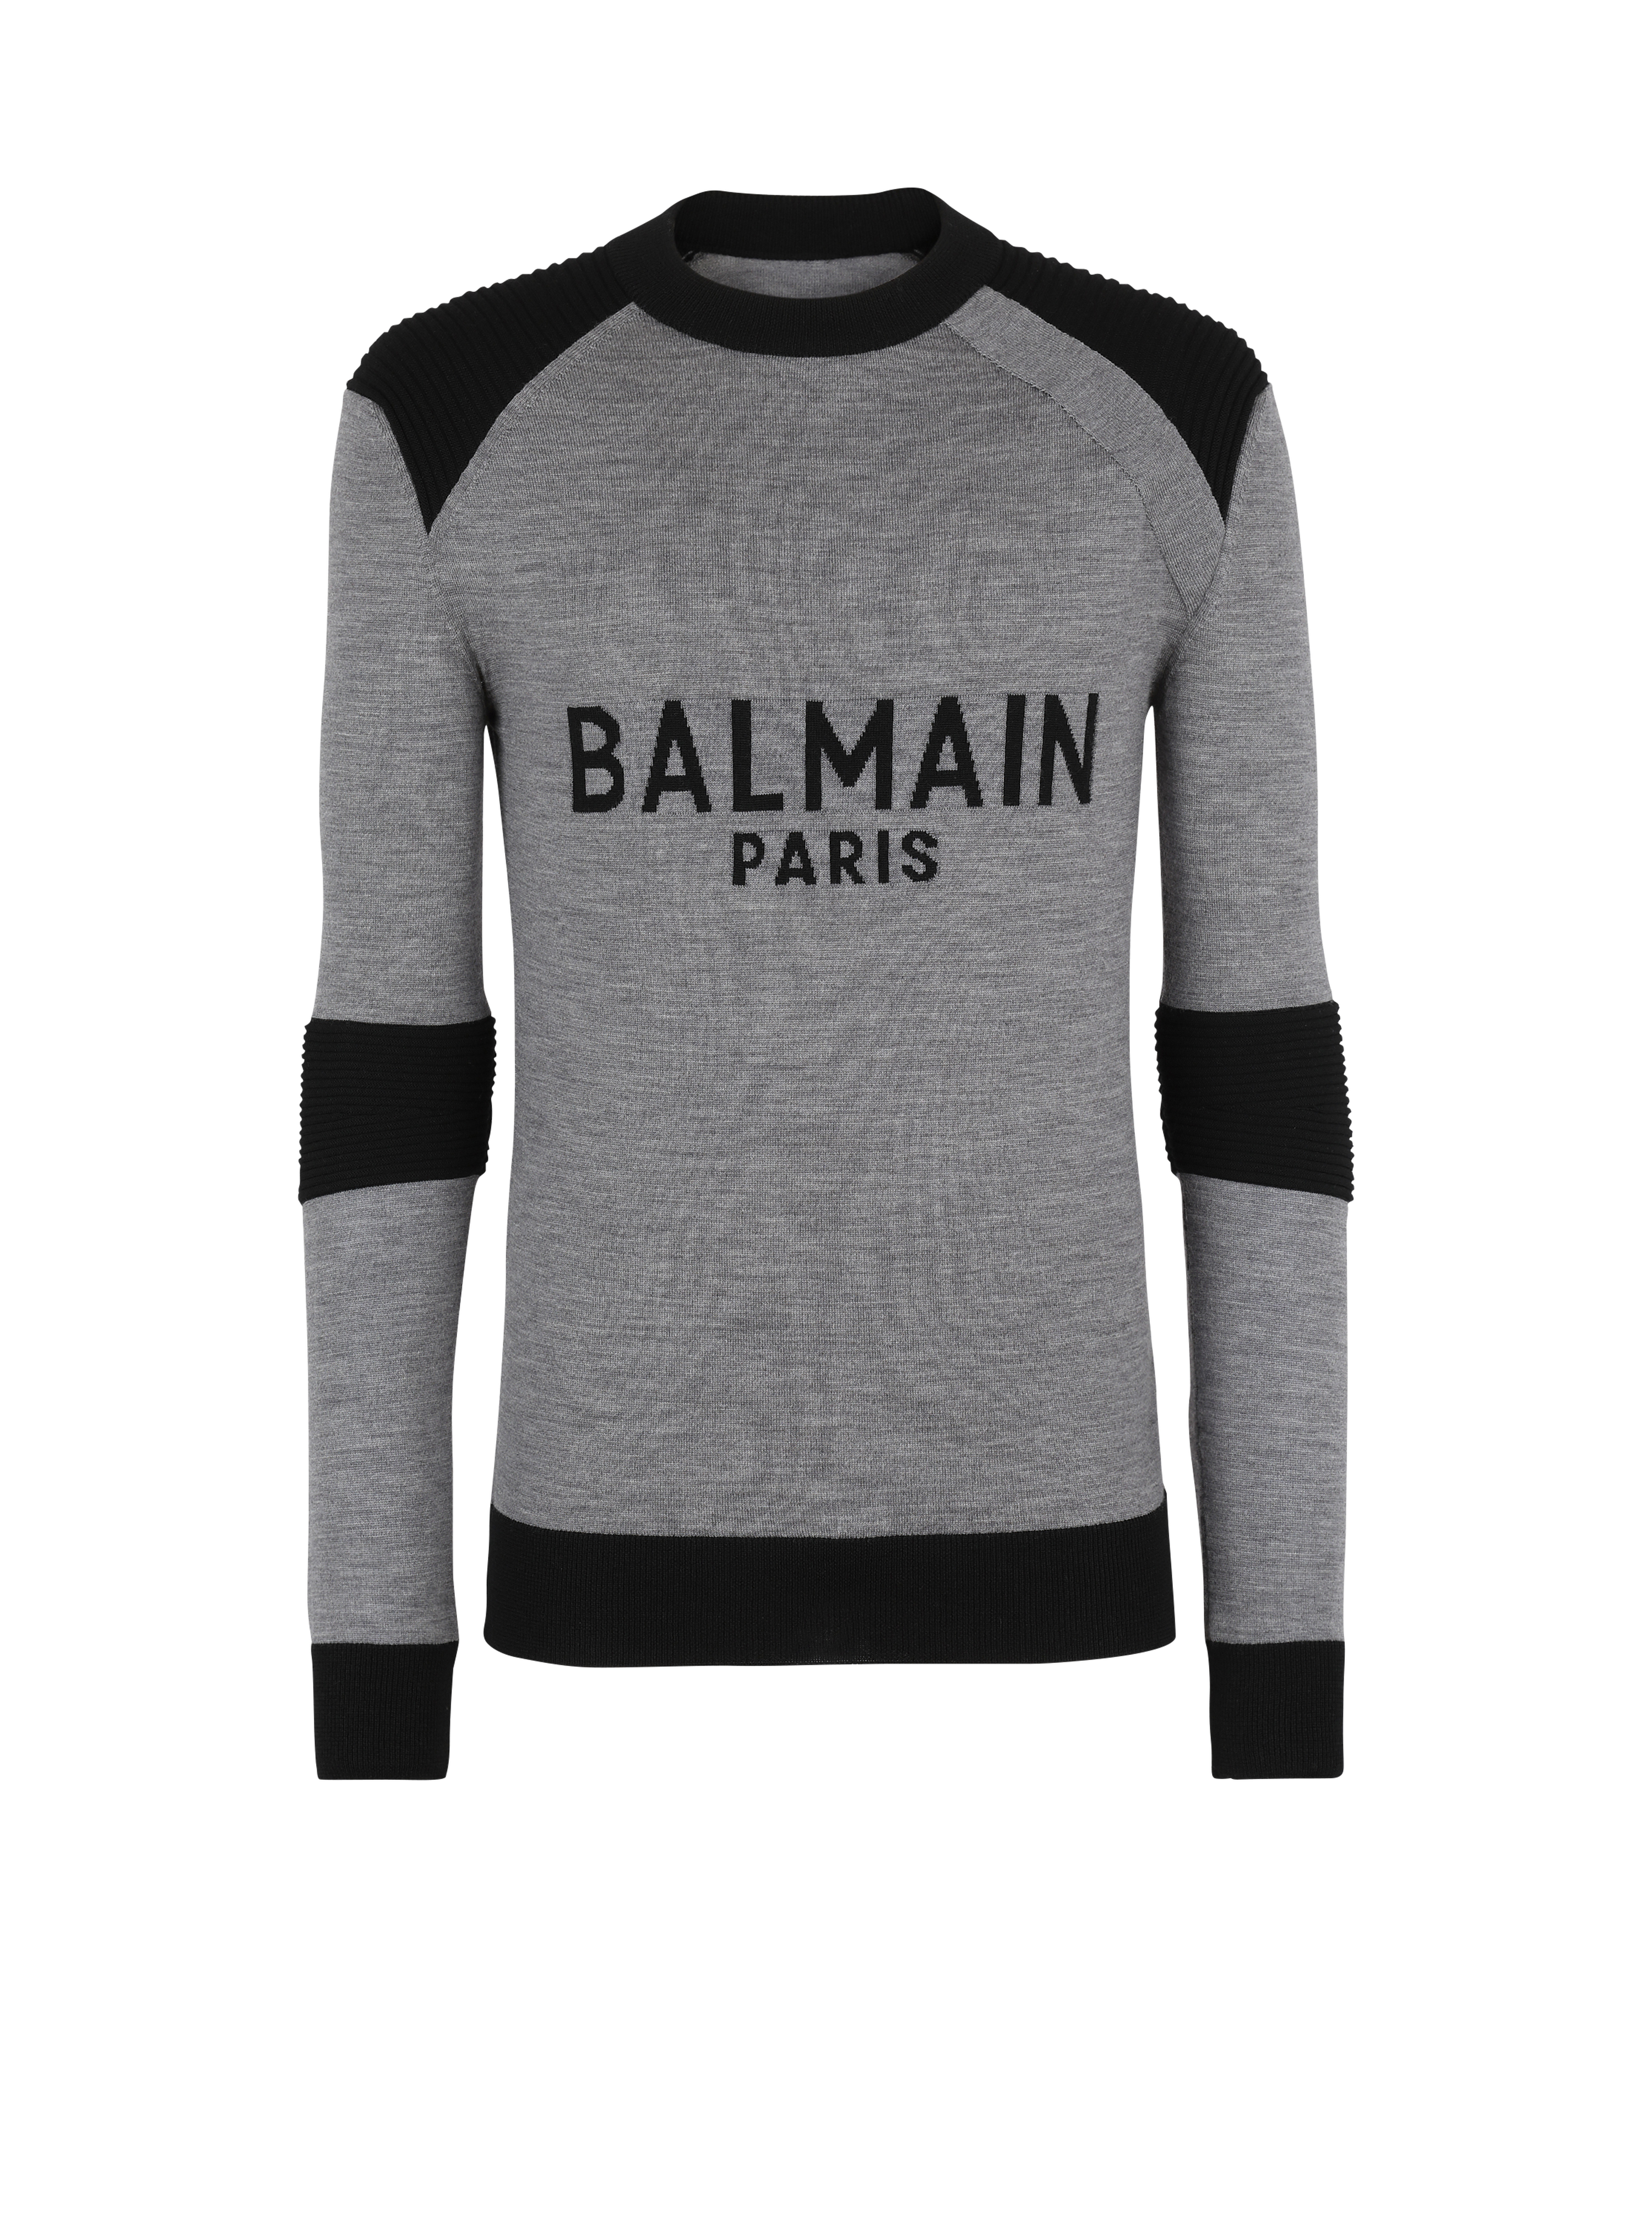 Maglia in lana con logo Balmain Paris, grigio